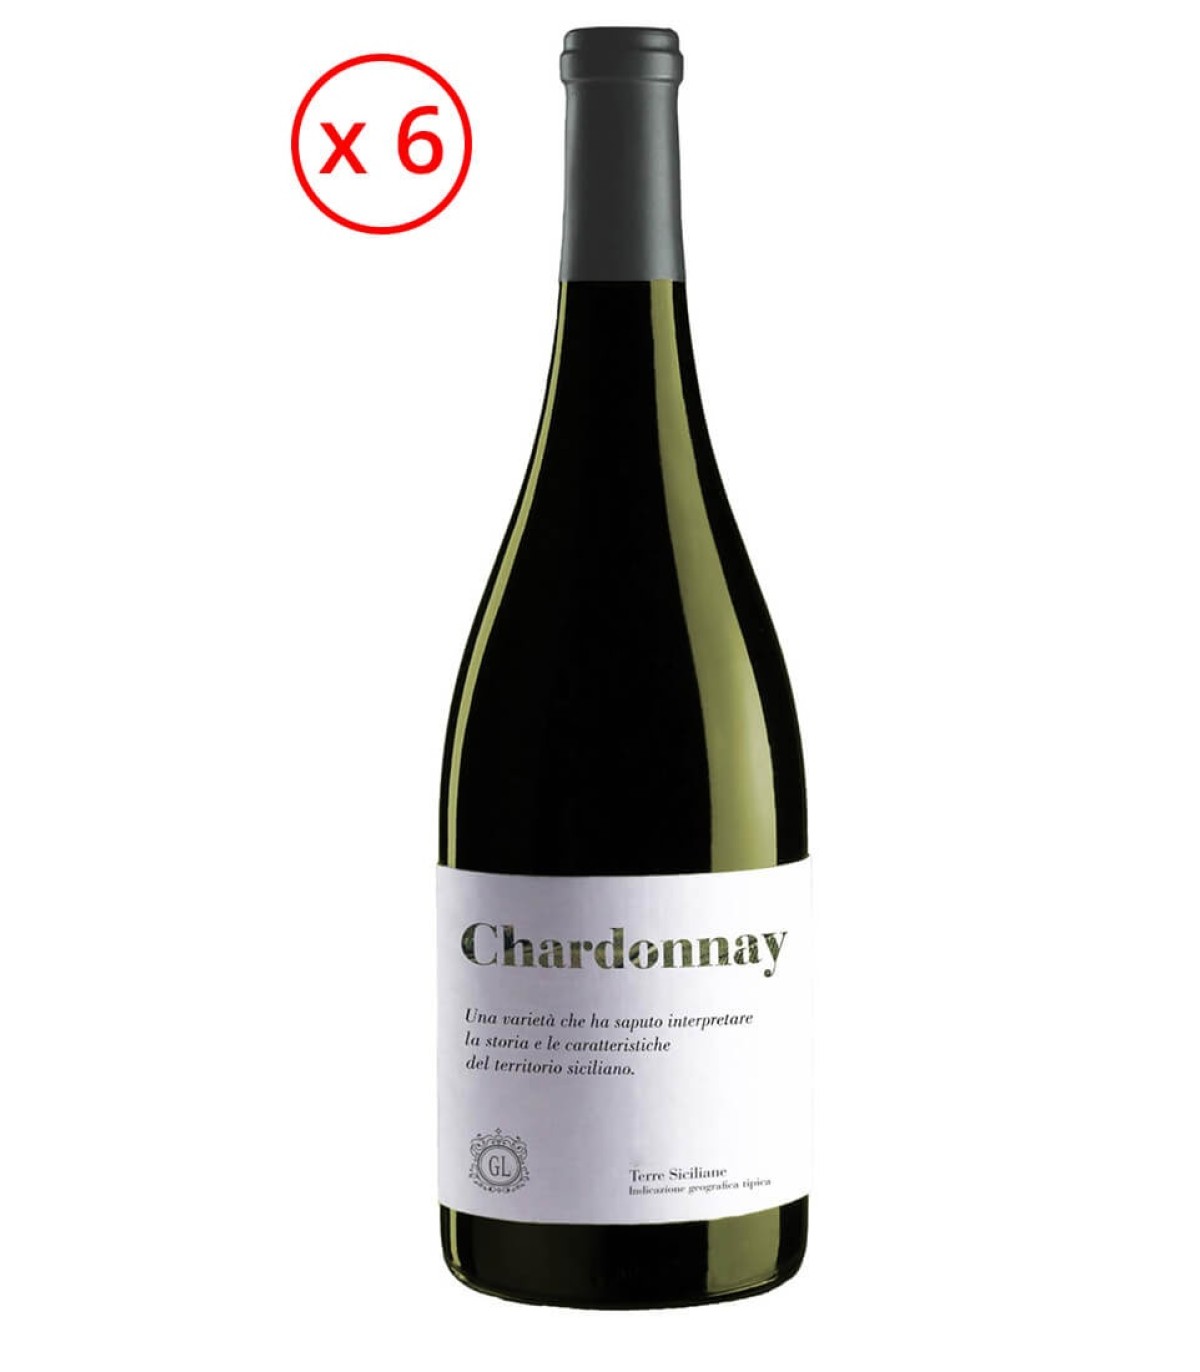 Chardonnay Terre siciliane IGT 2016 - Lisciandrello